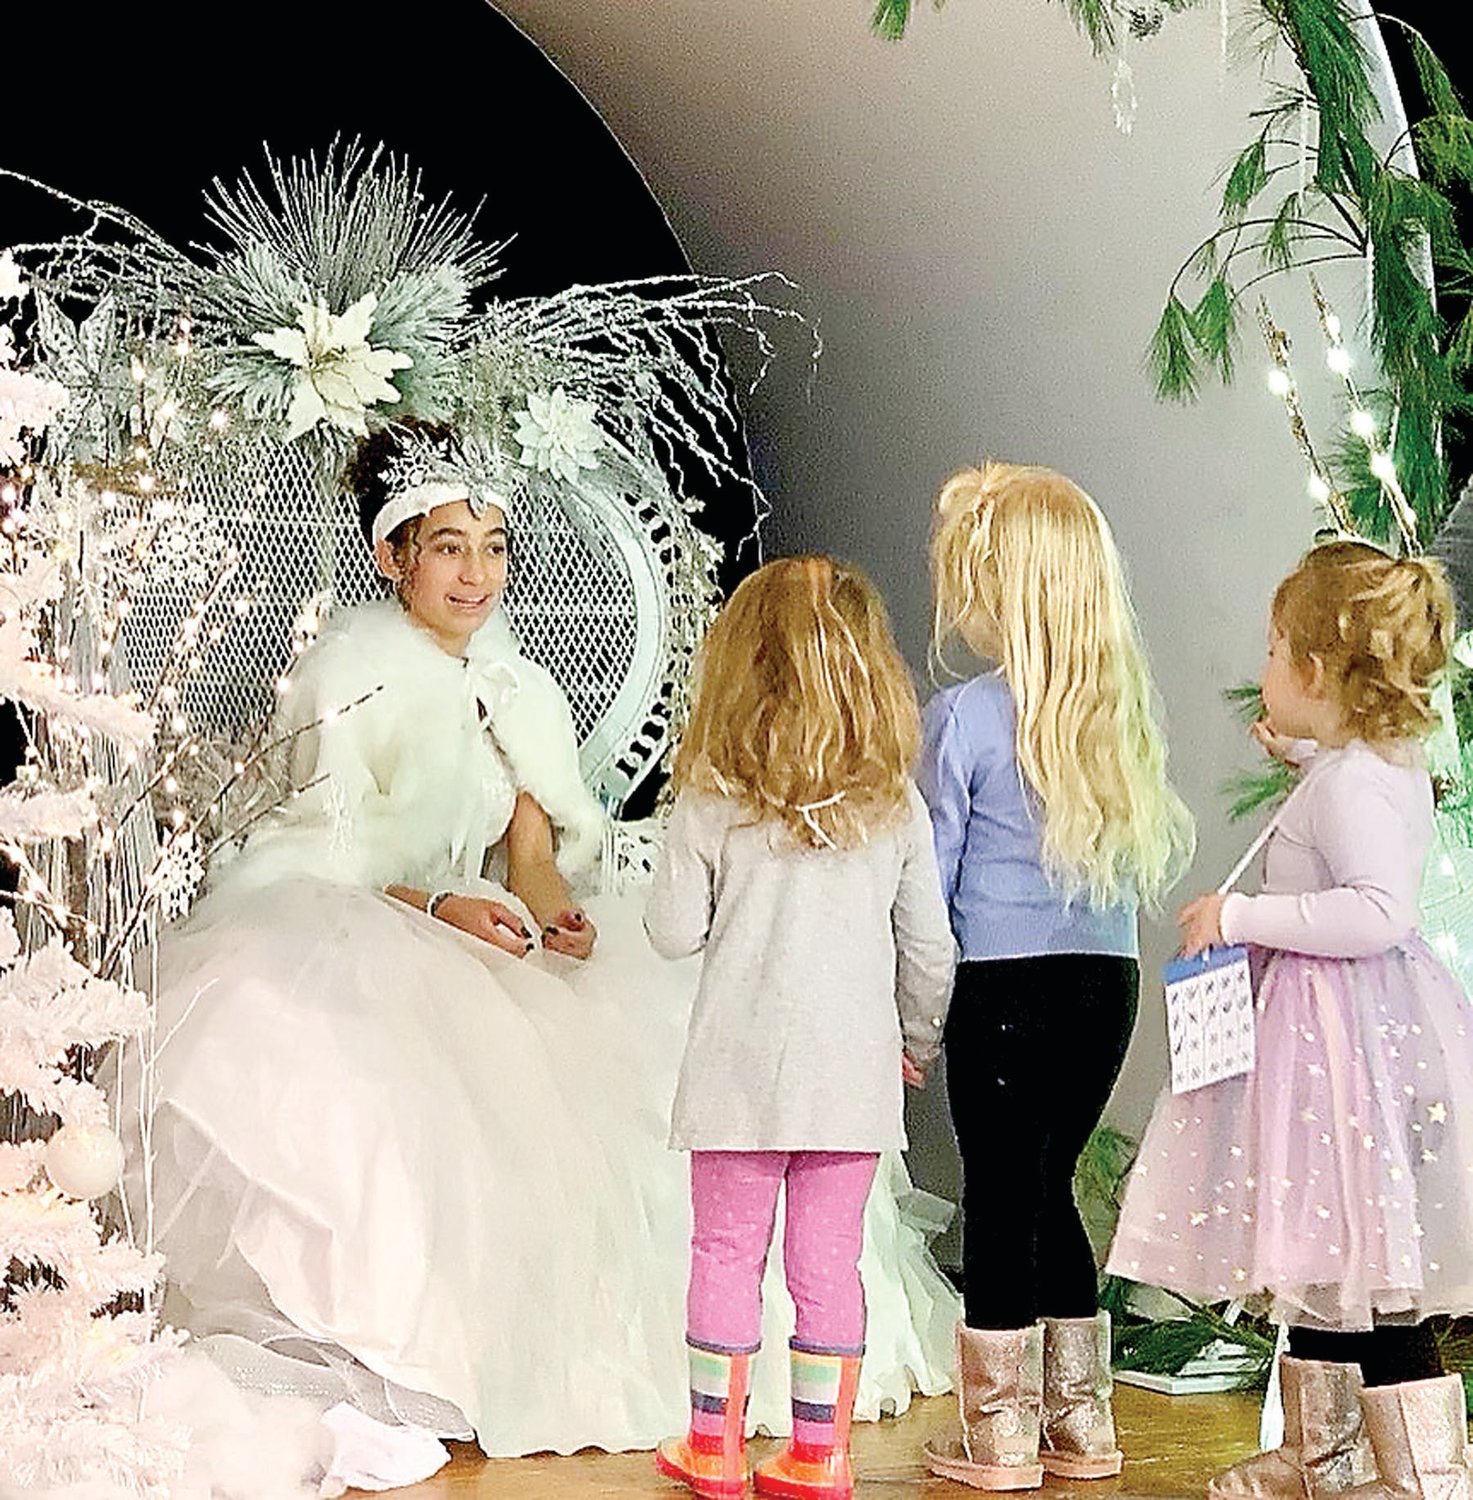 The Snow Queen meets with children.